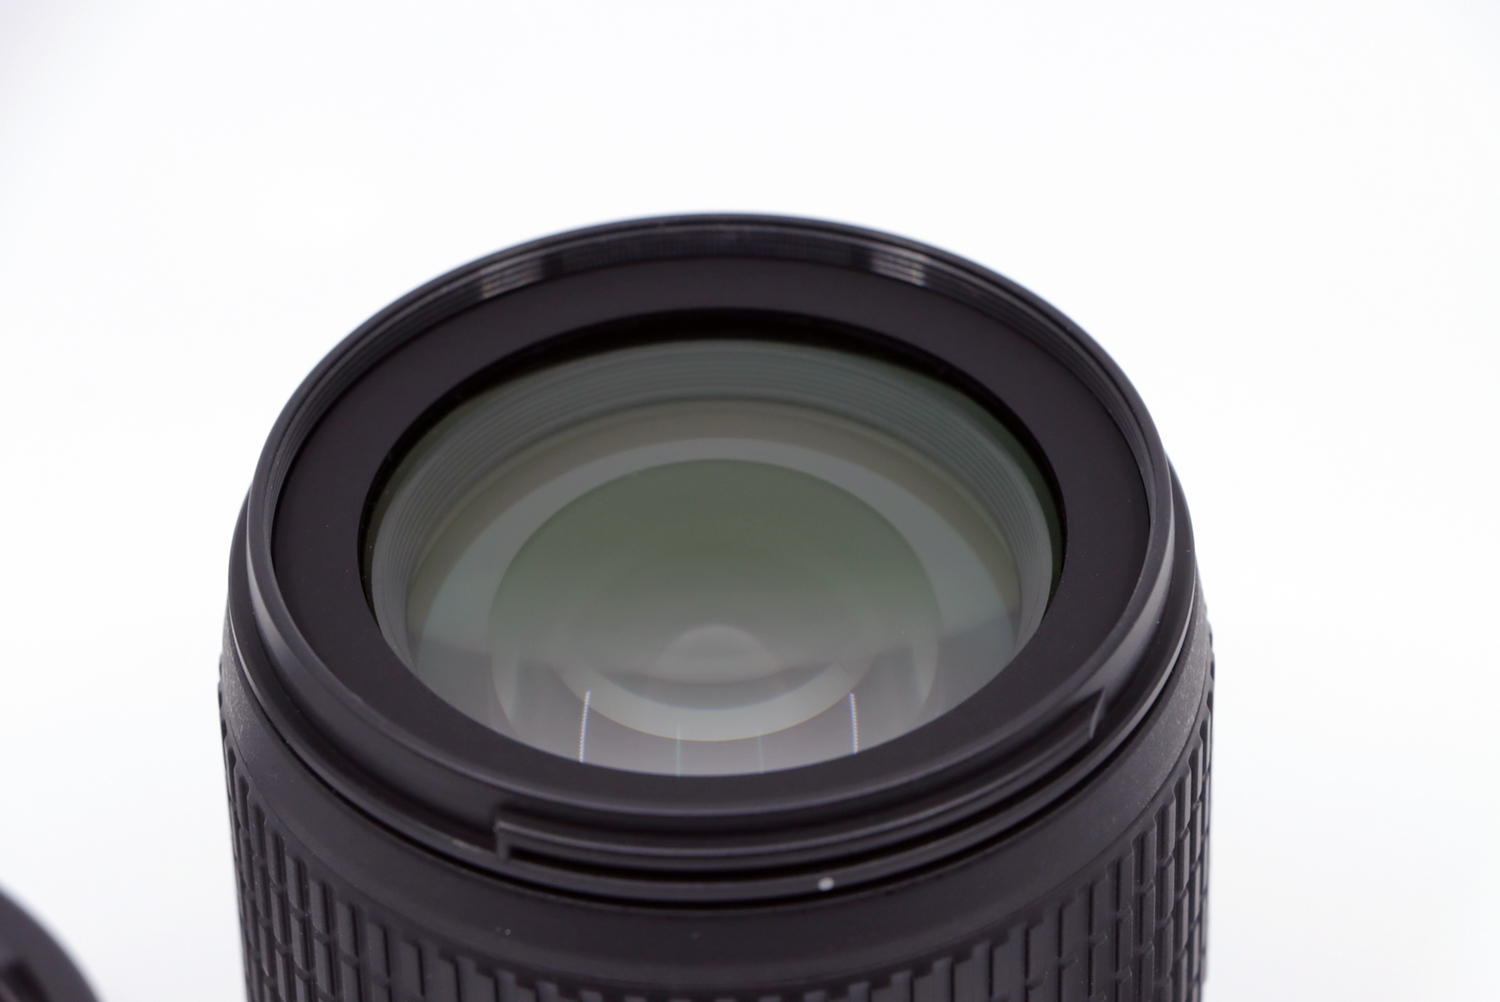 Nikon DX 18-105mm F3.5-5.6 | IMG_6836.JPG